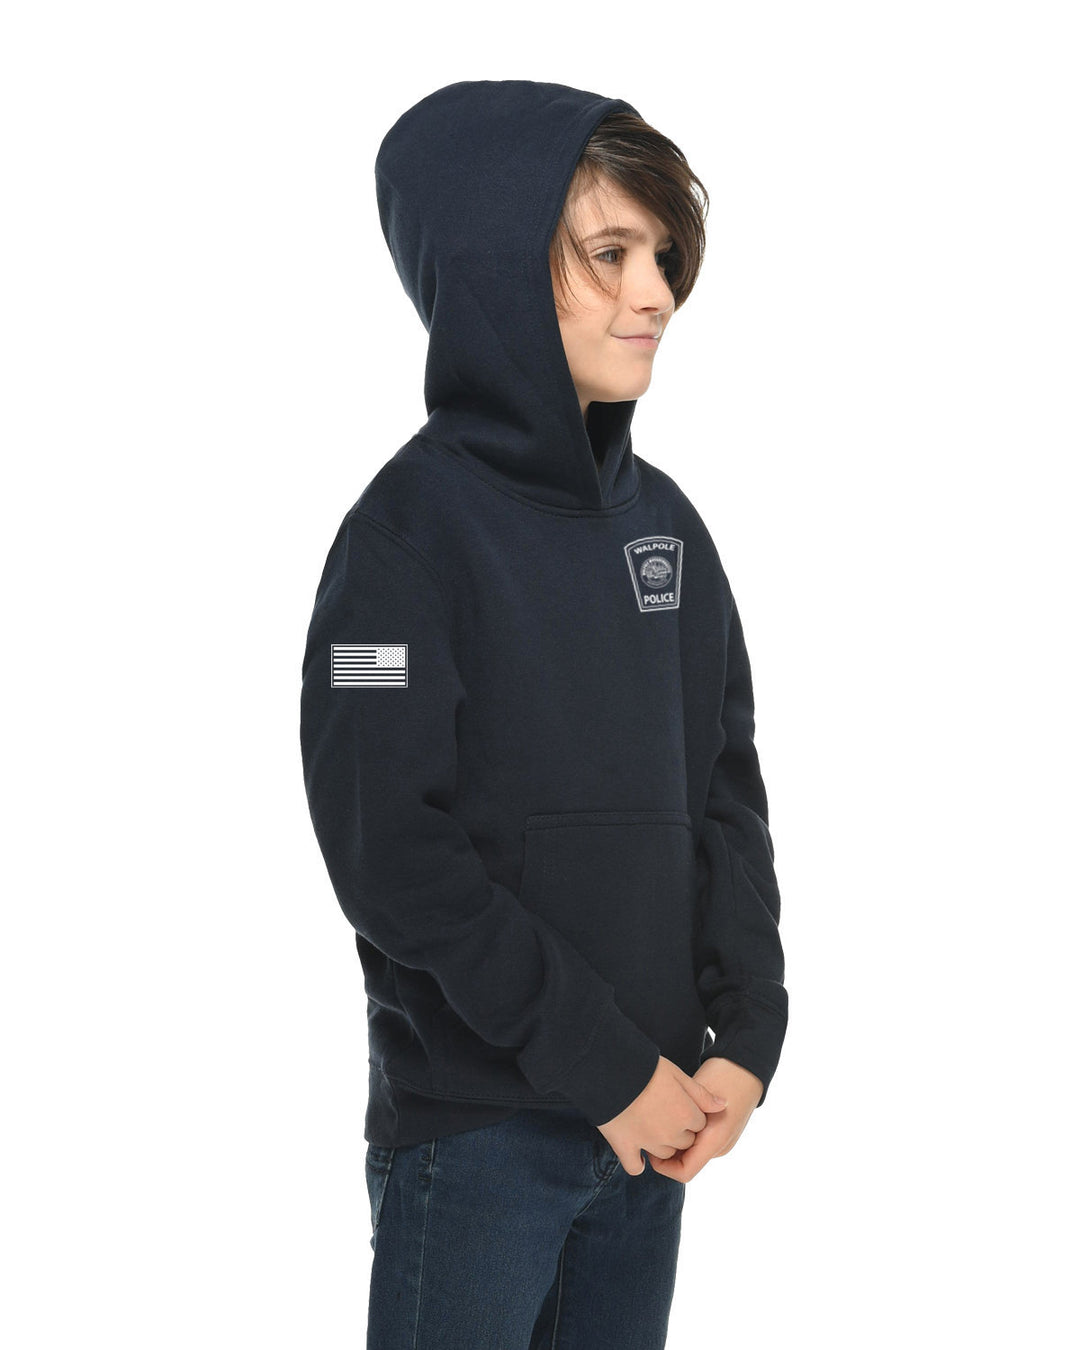 WPD 115 Youth Pullover Hooded Sweatshirt (LS1401Y)